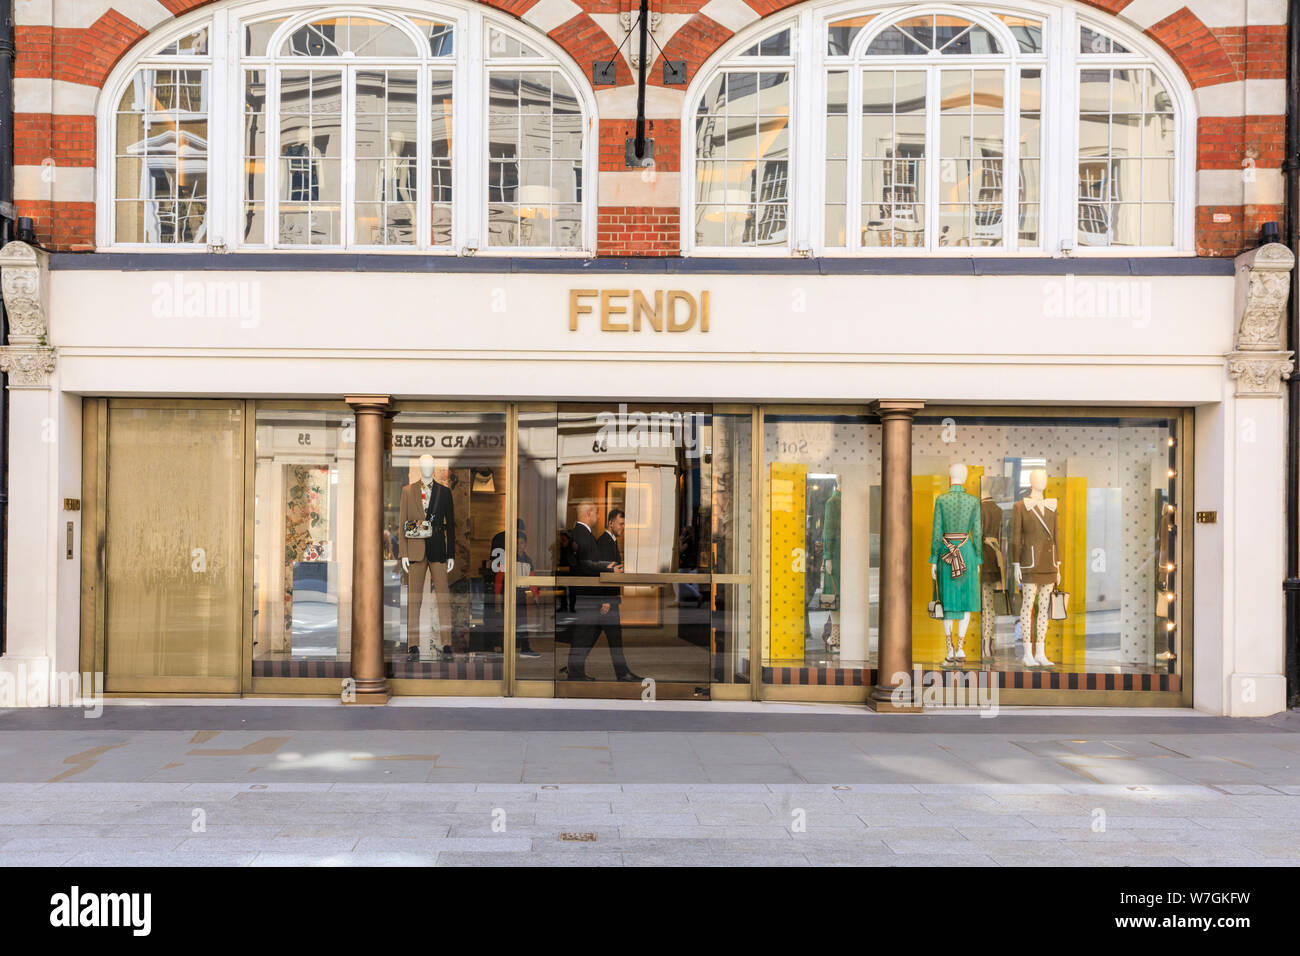 Fendi Italian brand fashion and retail 